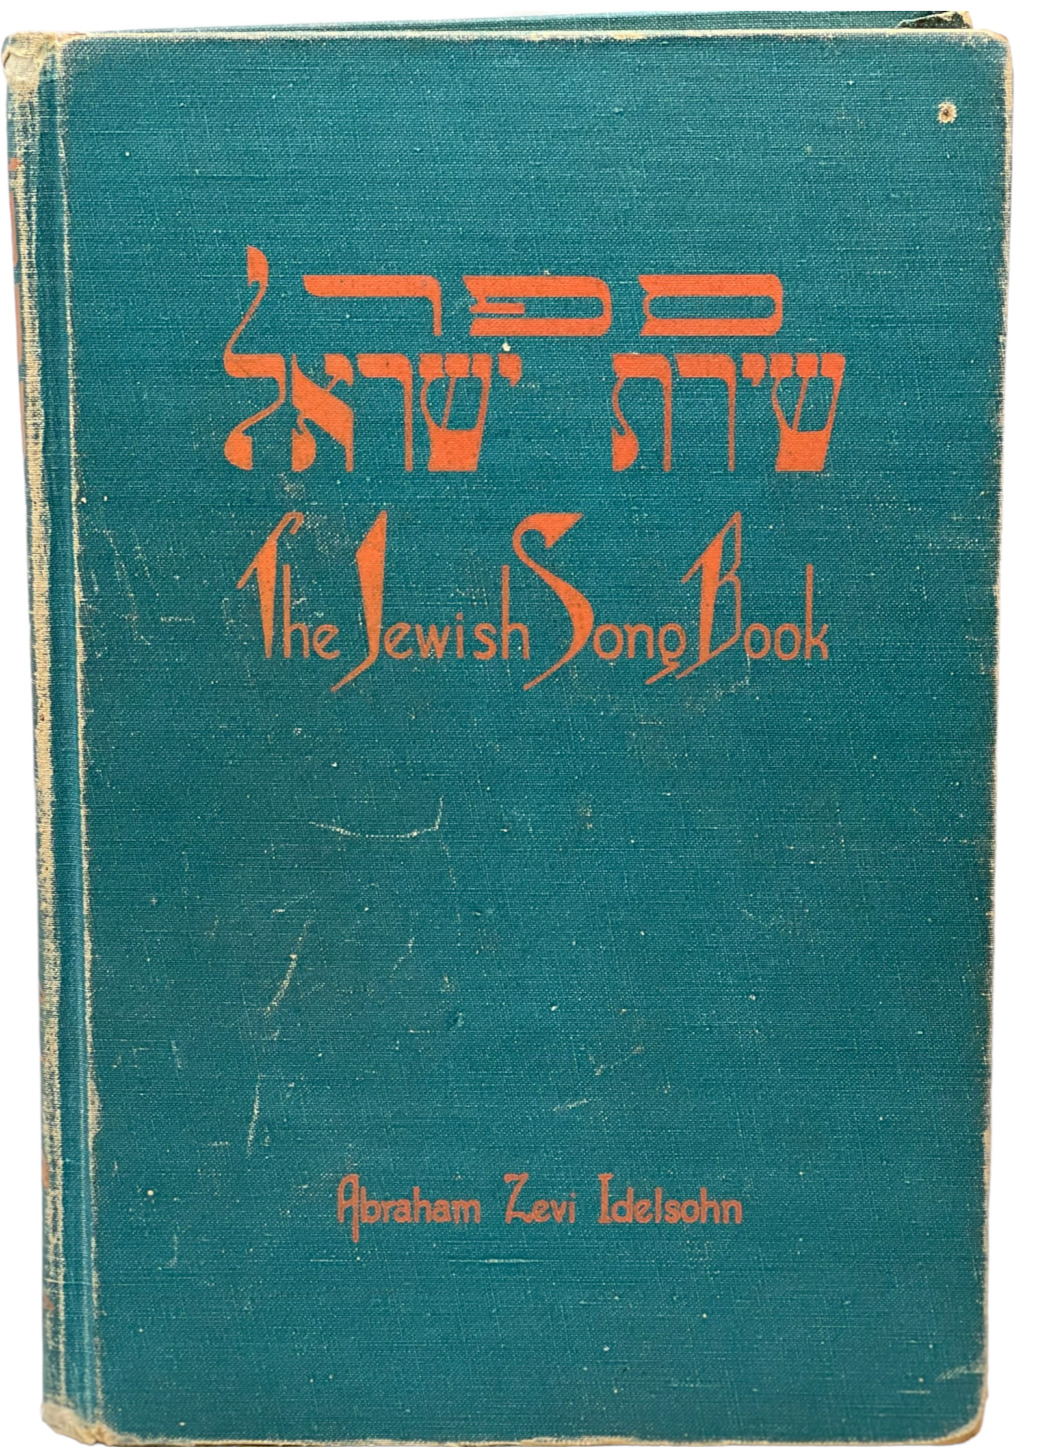 The Jewish Song Book Abraham Zevi Idelsohn 1961 Hebrew Hymns Synagogue Hanukkah